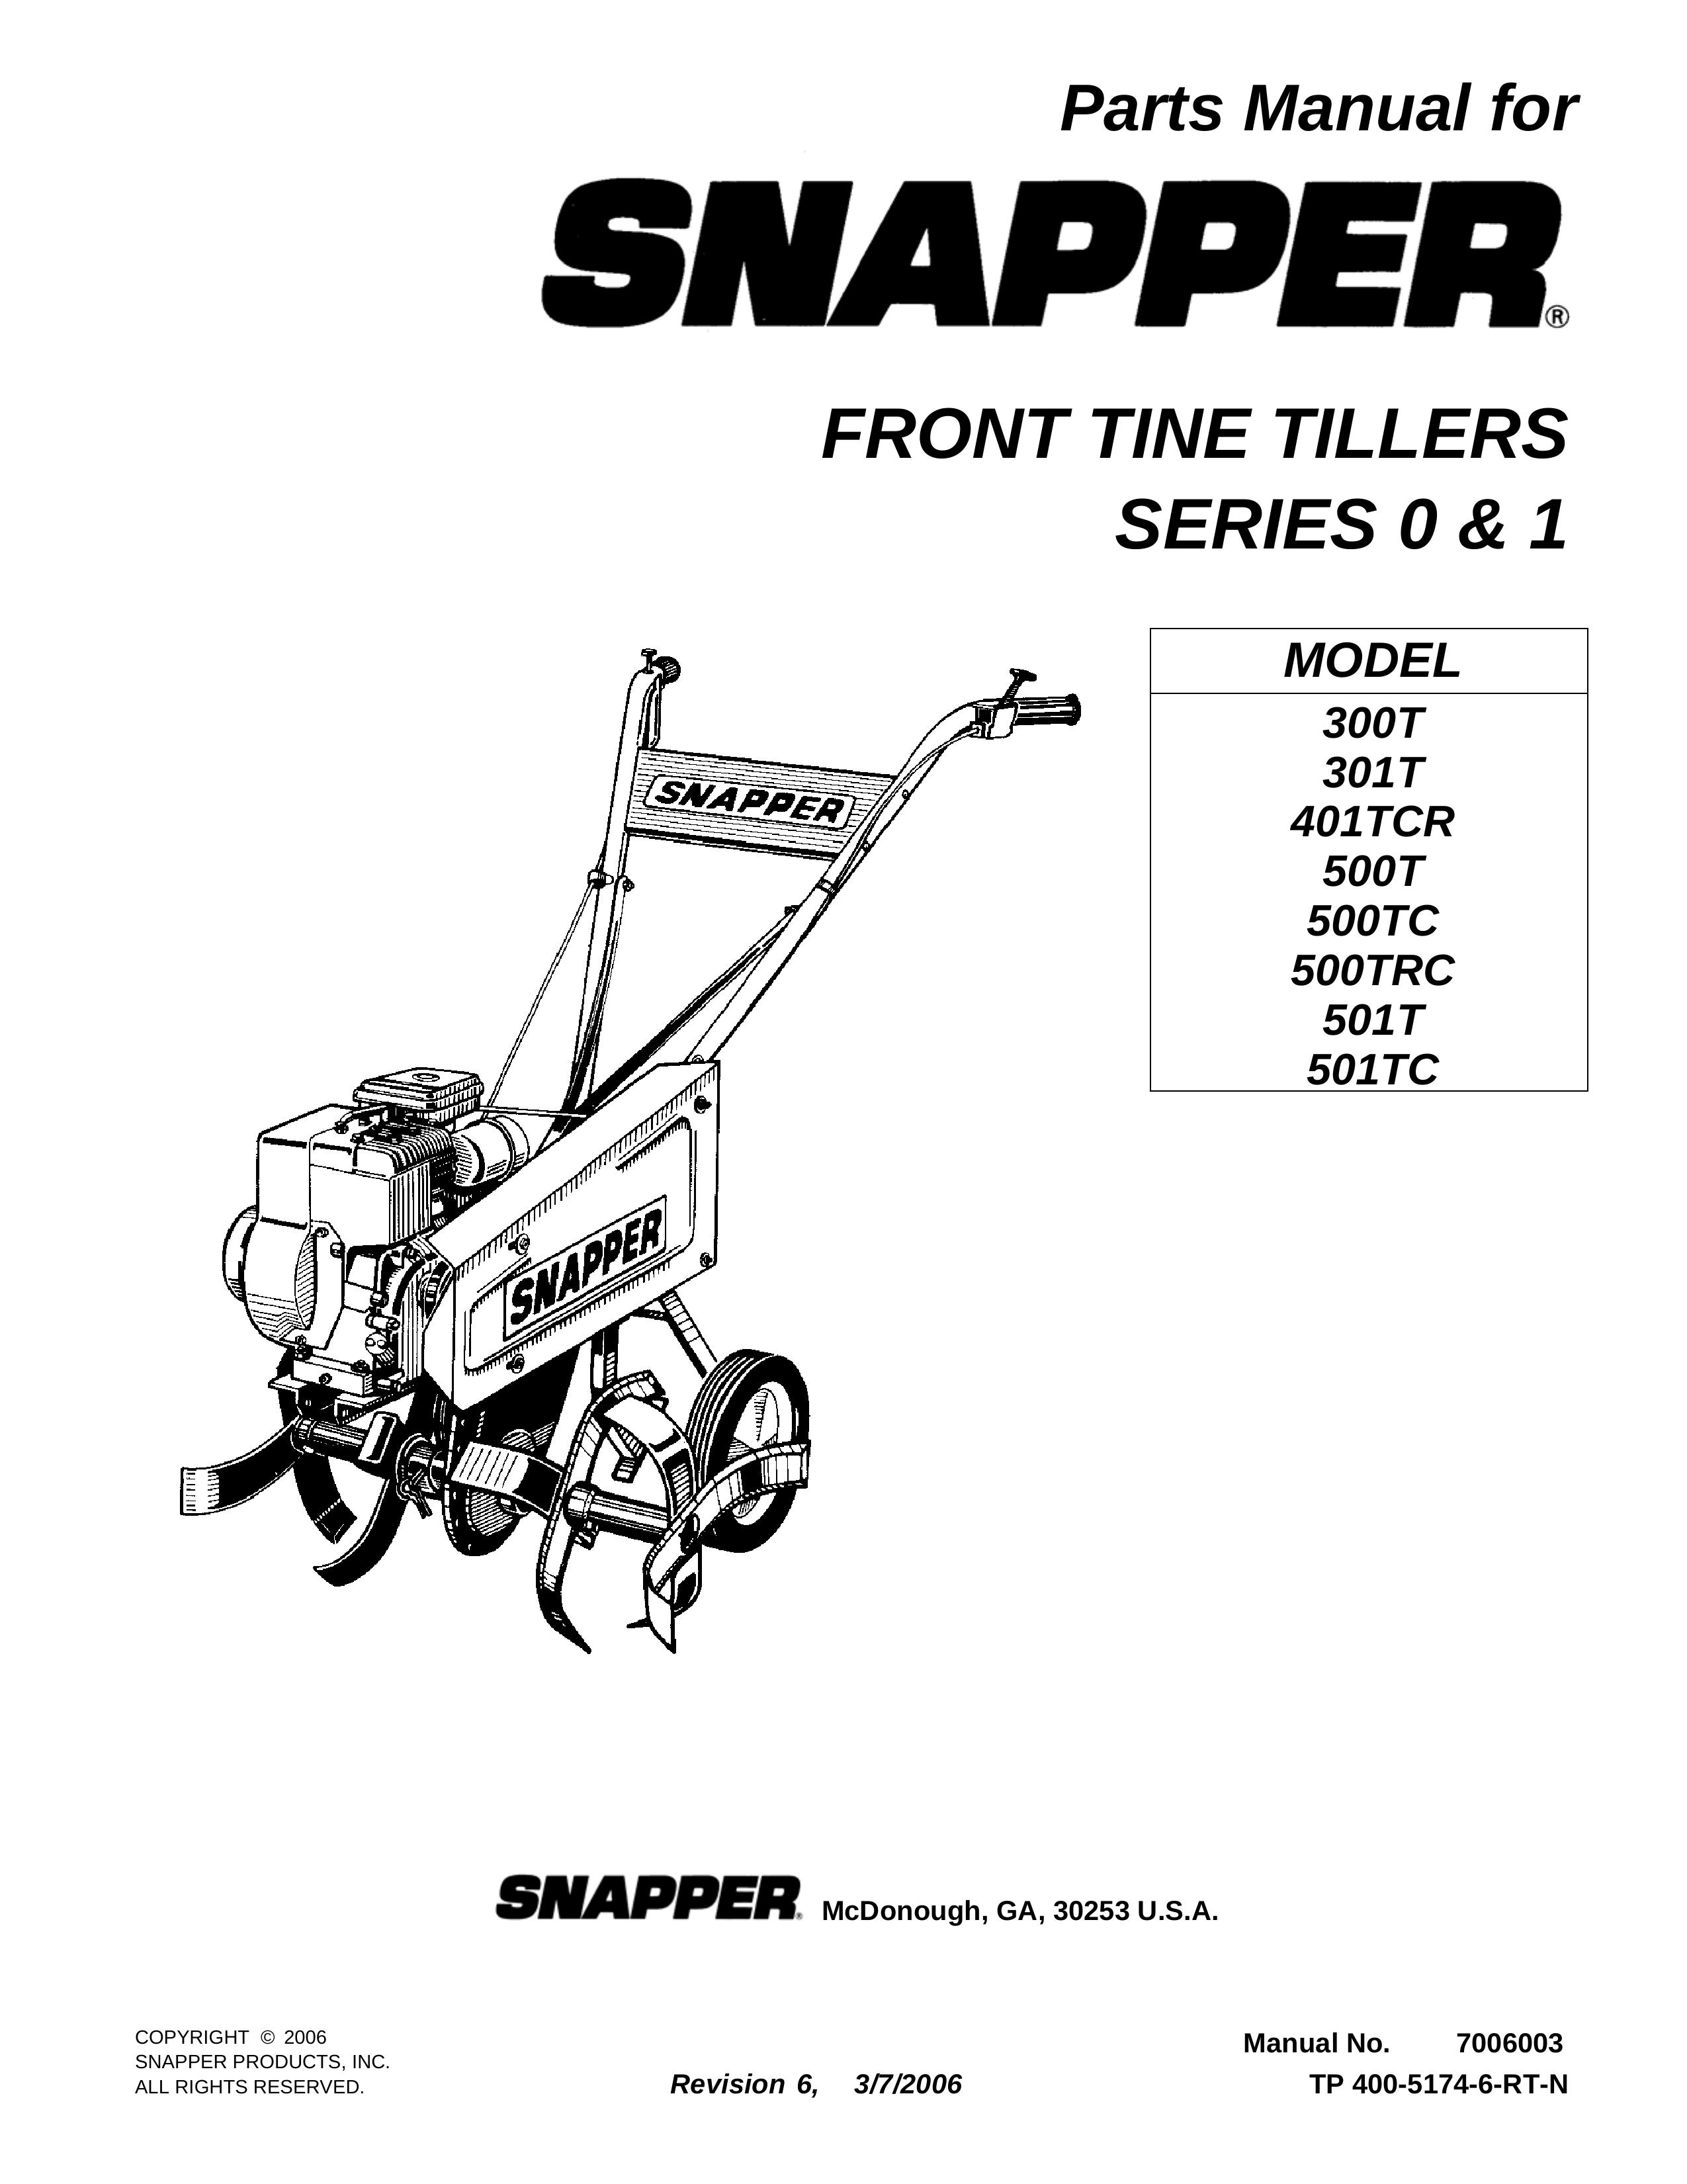 Snapper 501TC Tiller User Manual